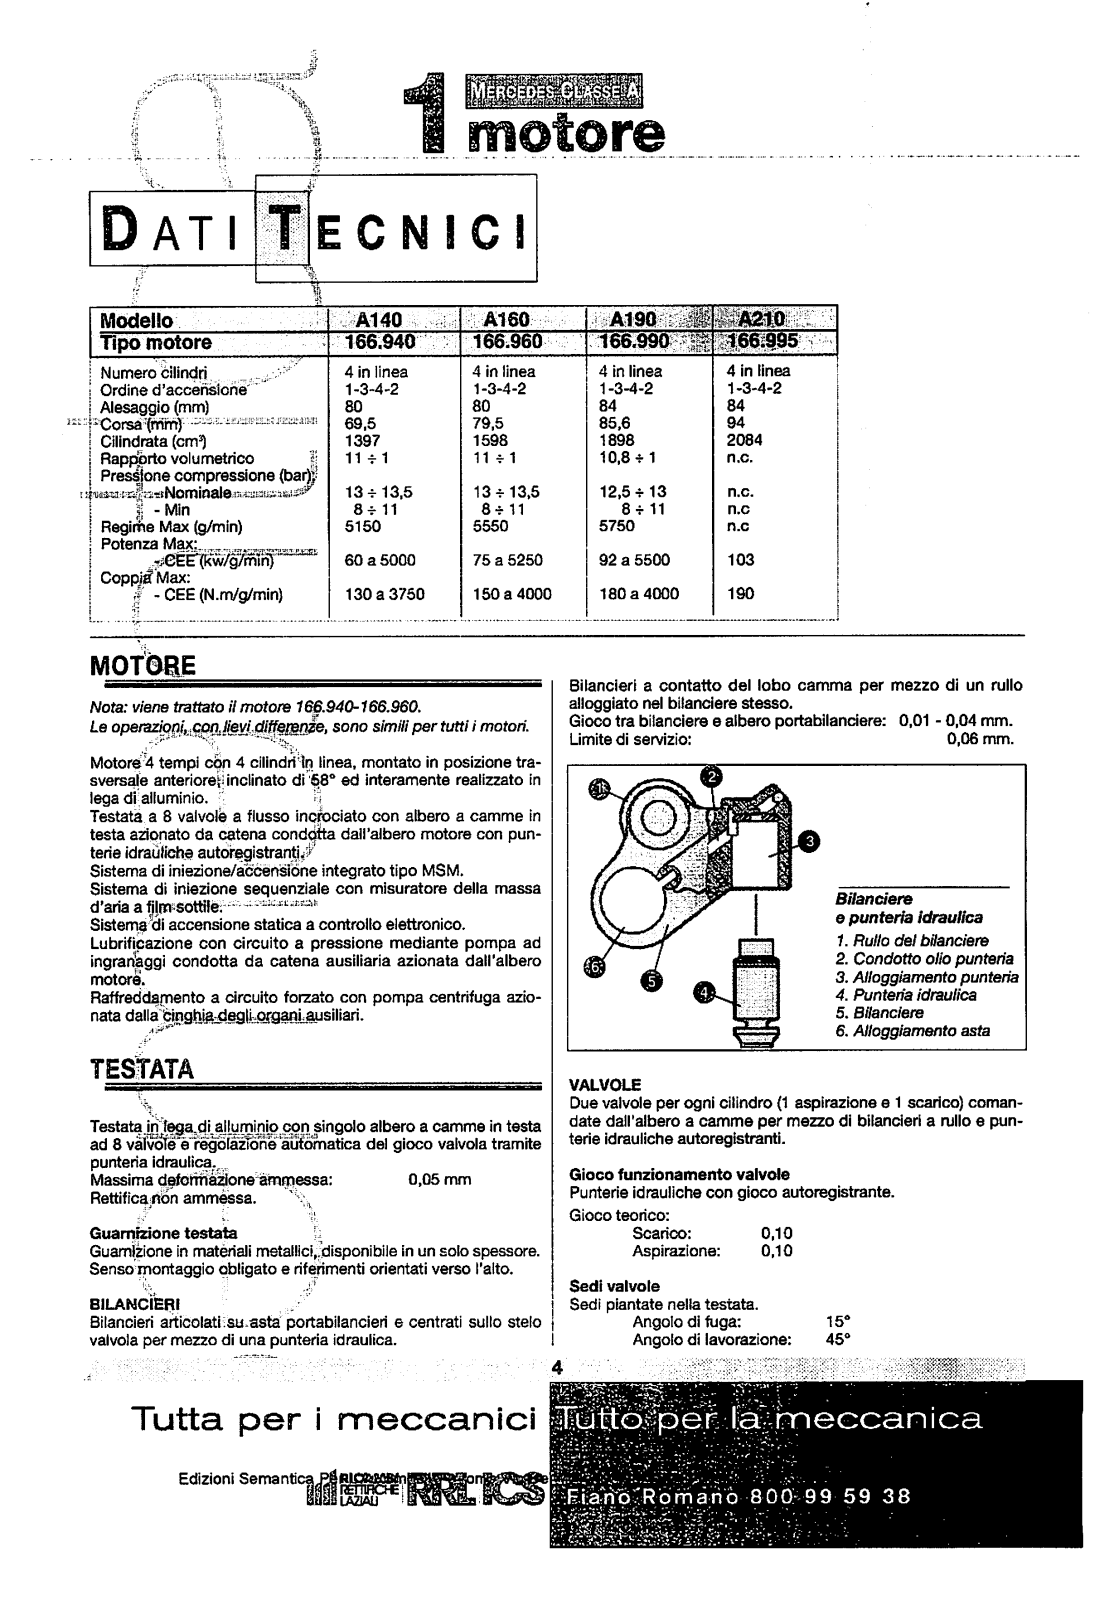 w168 - (W168): Manual técnico - tudo sobre - 1997 a 2004 - italiano Qrls7b